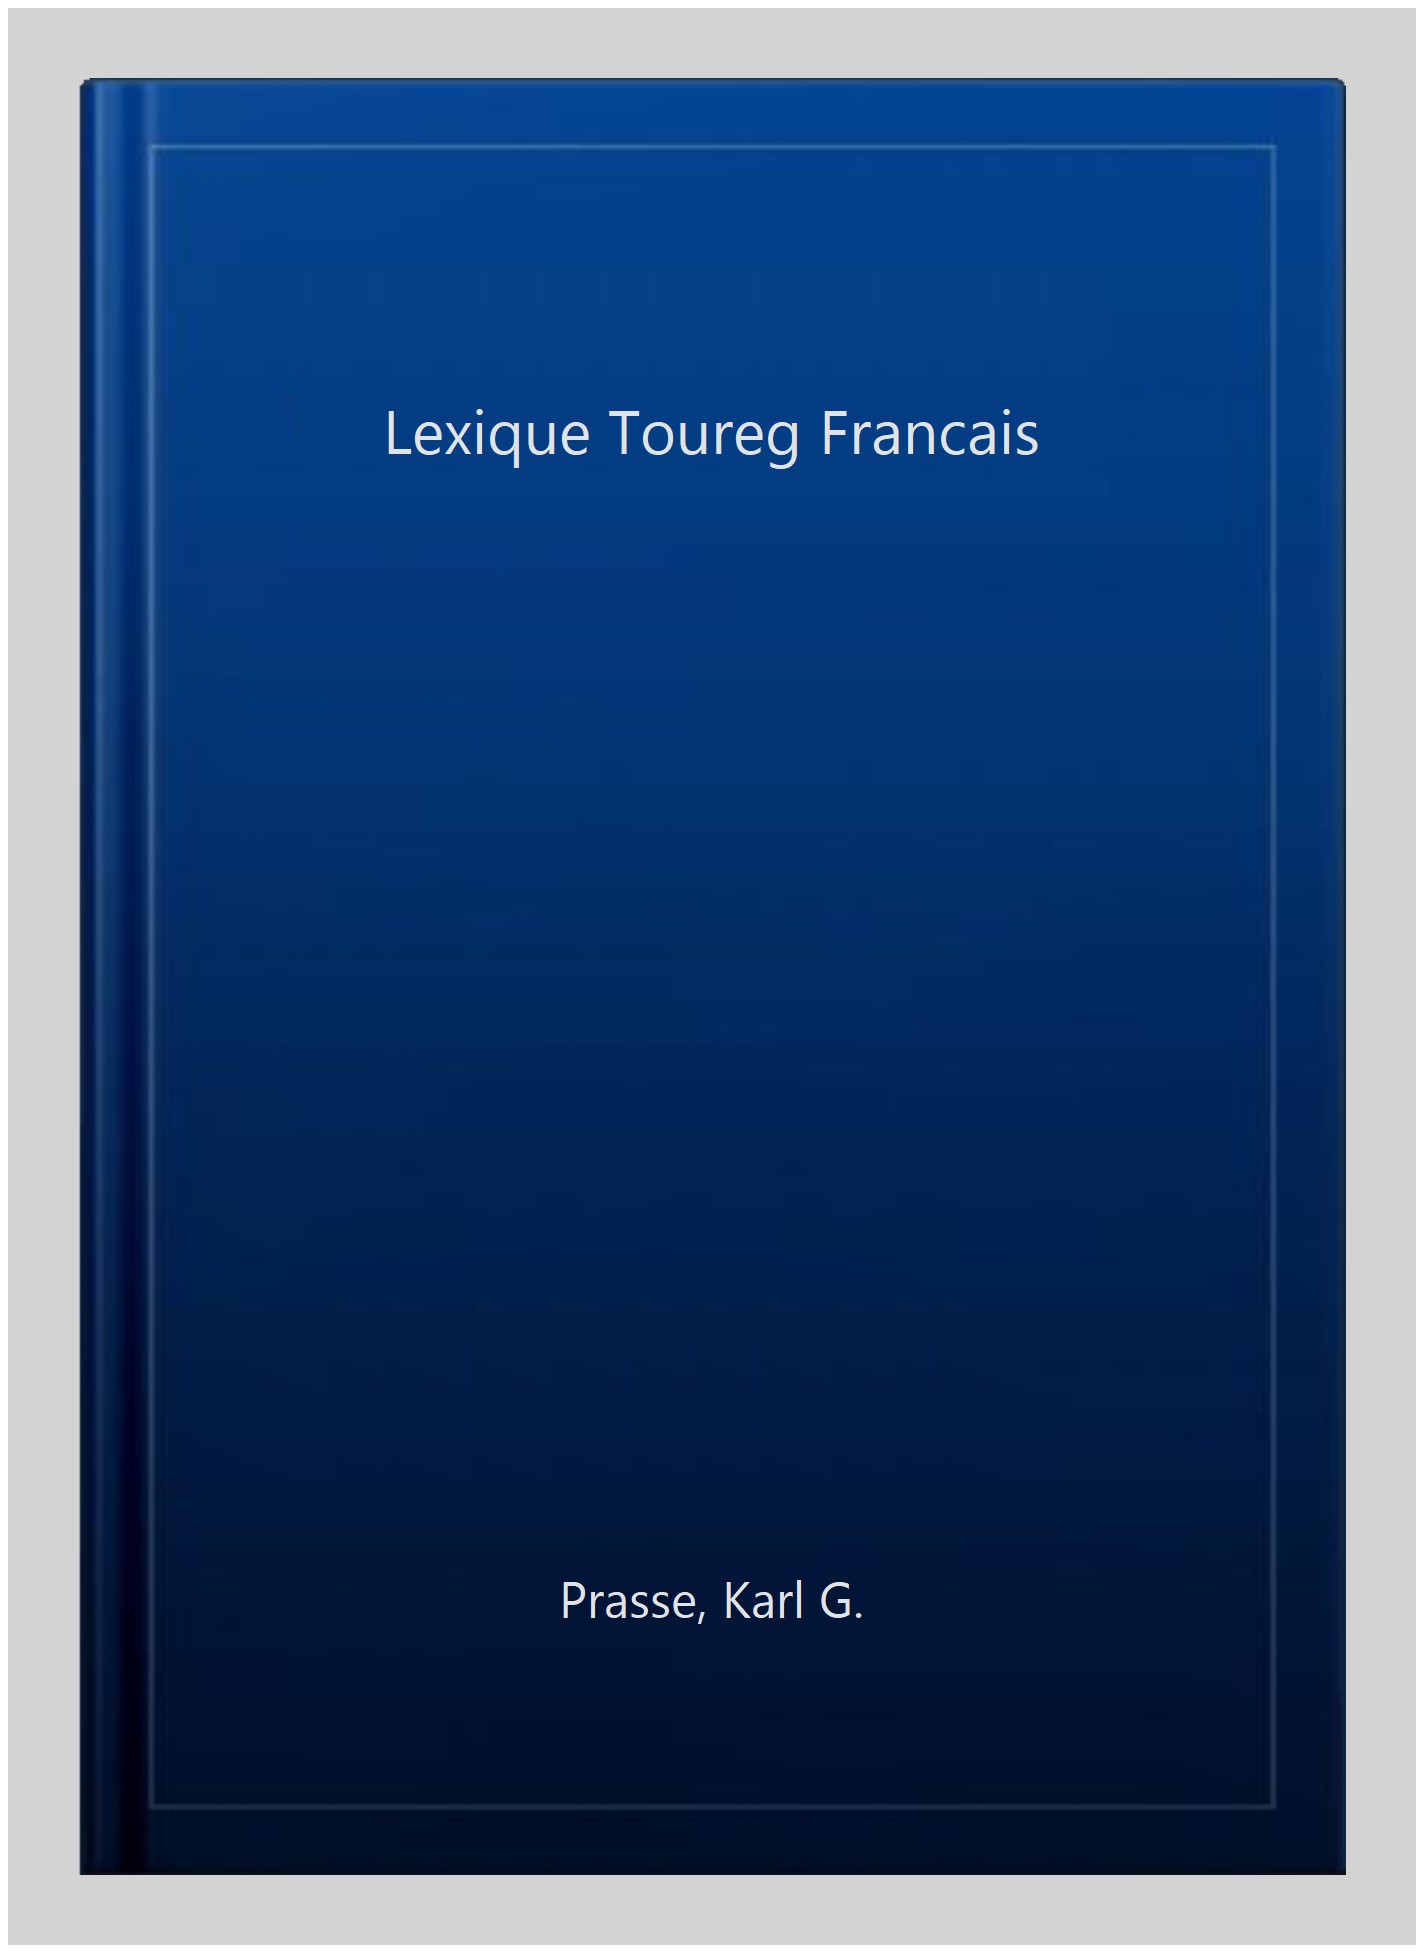 Lexique Toureg Francais - Prasse, Karl G.